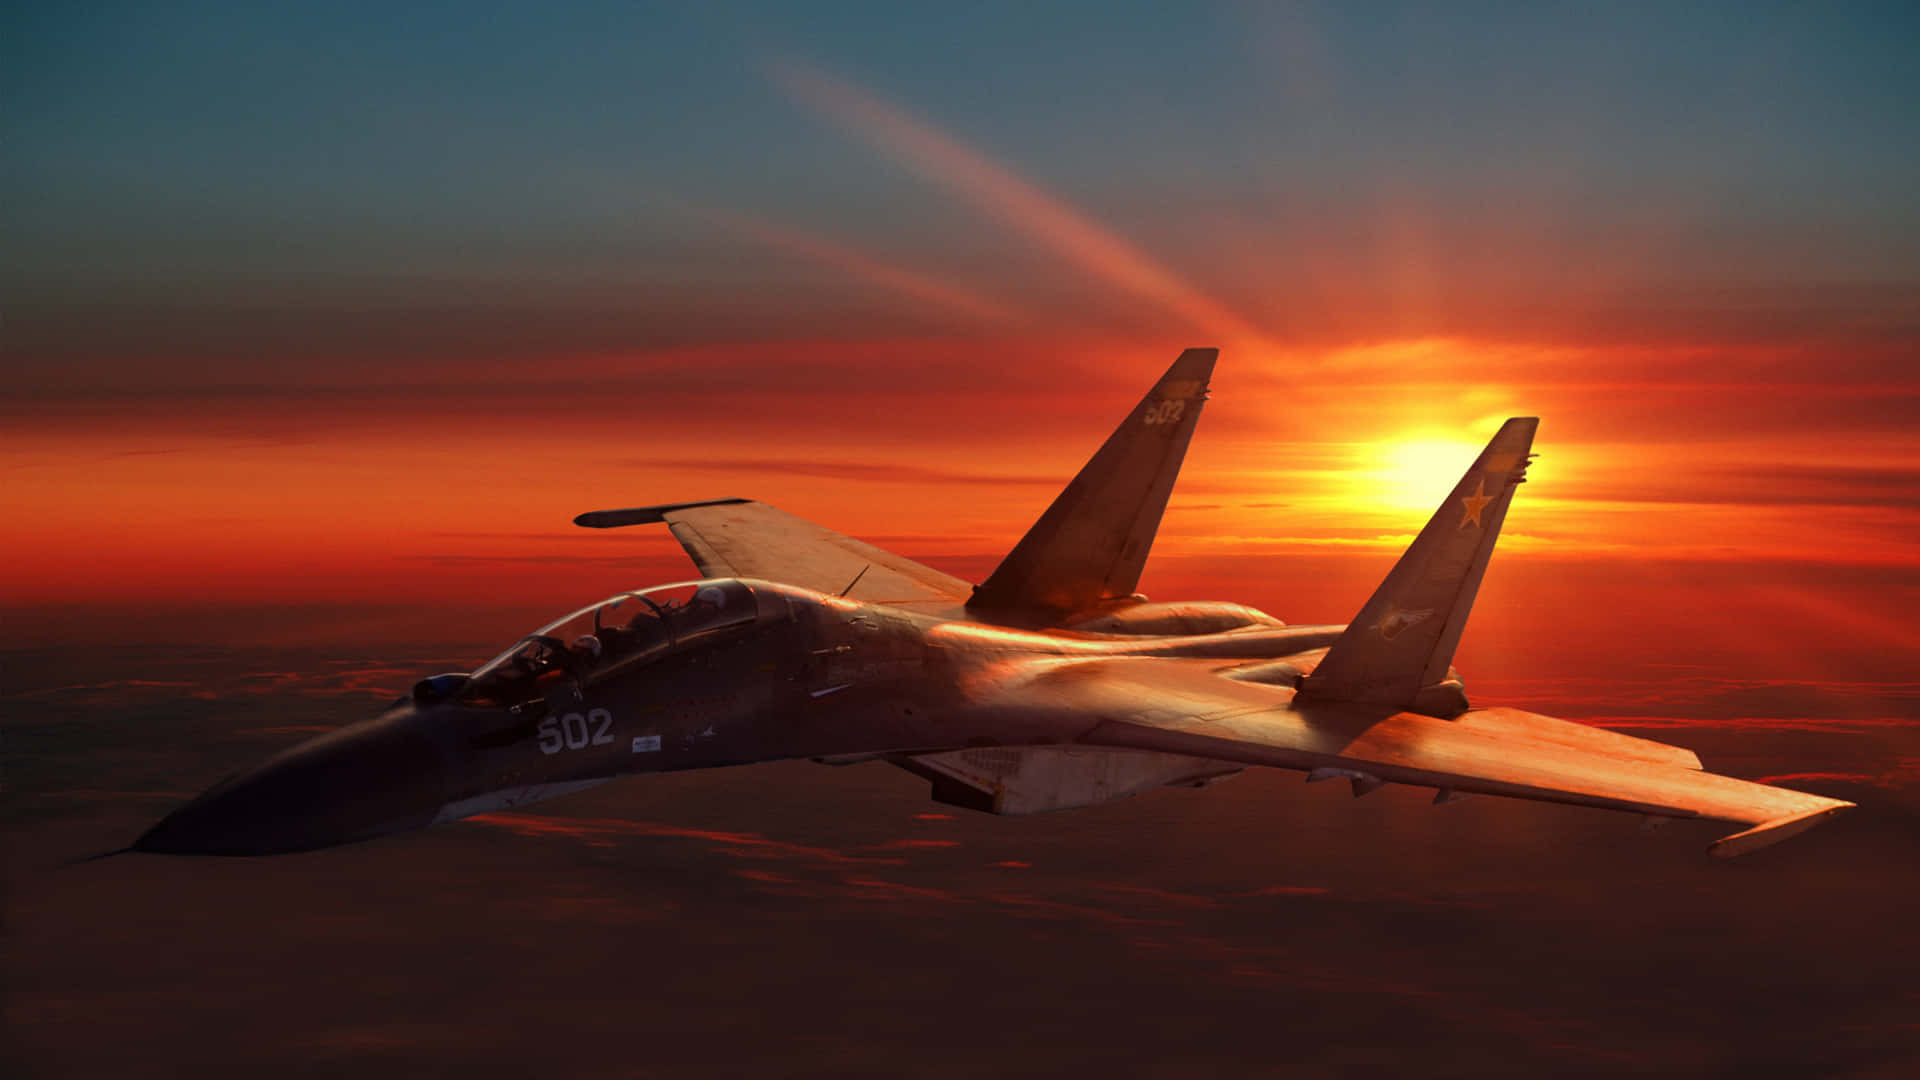 Fondode Pantalla De Atardecer De Sukhoi Su-30mki Jumbo Jets En 1080p.